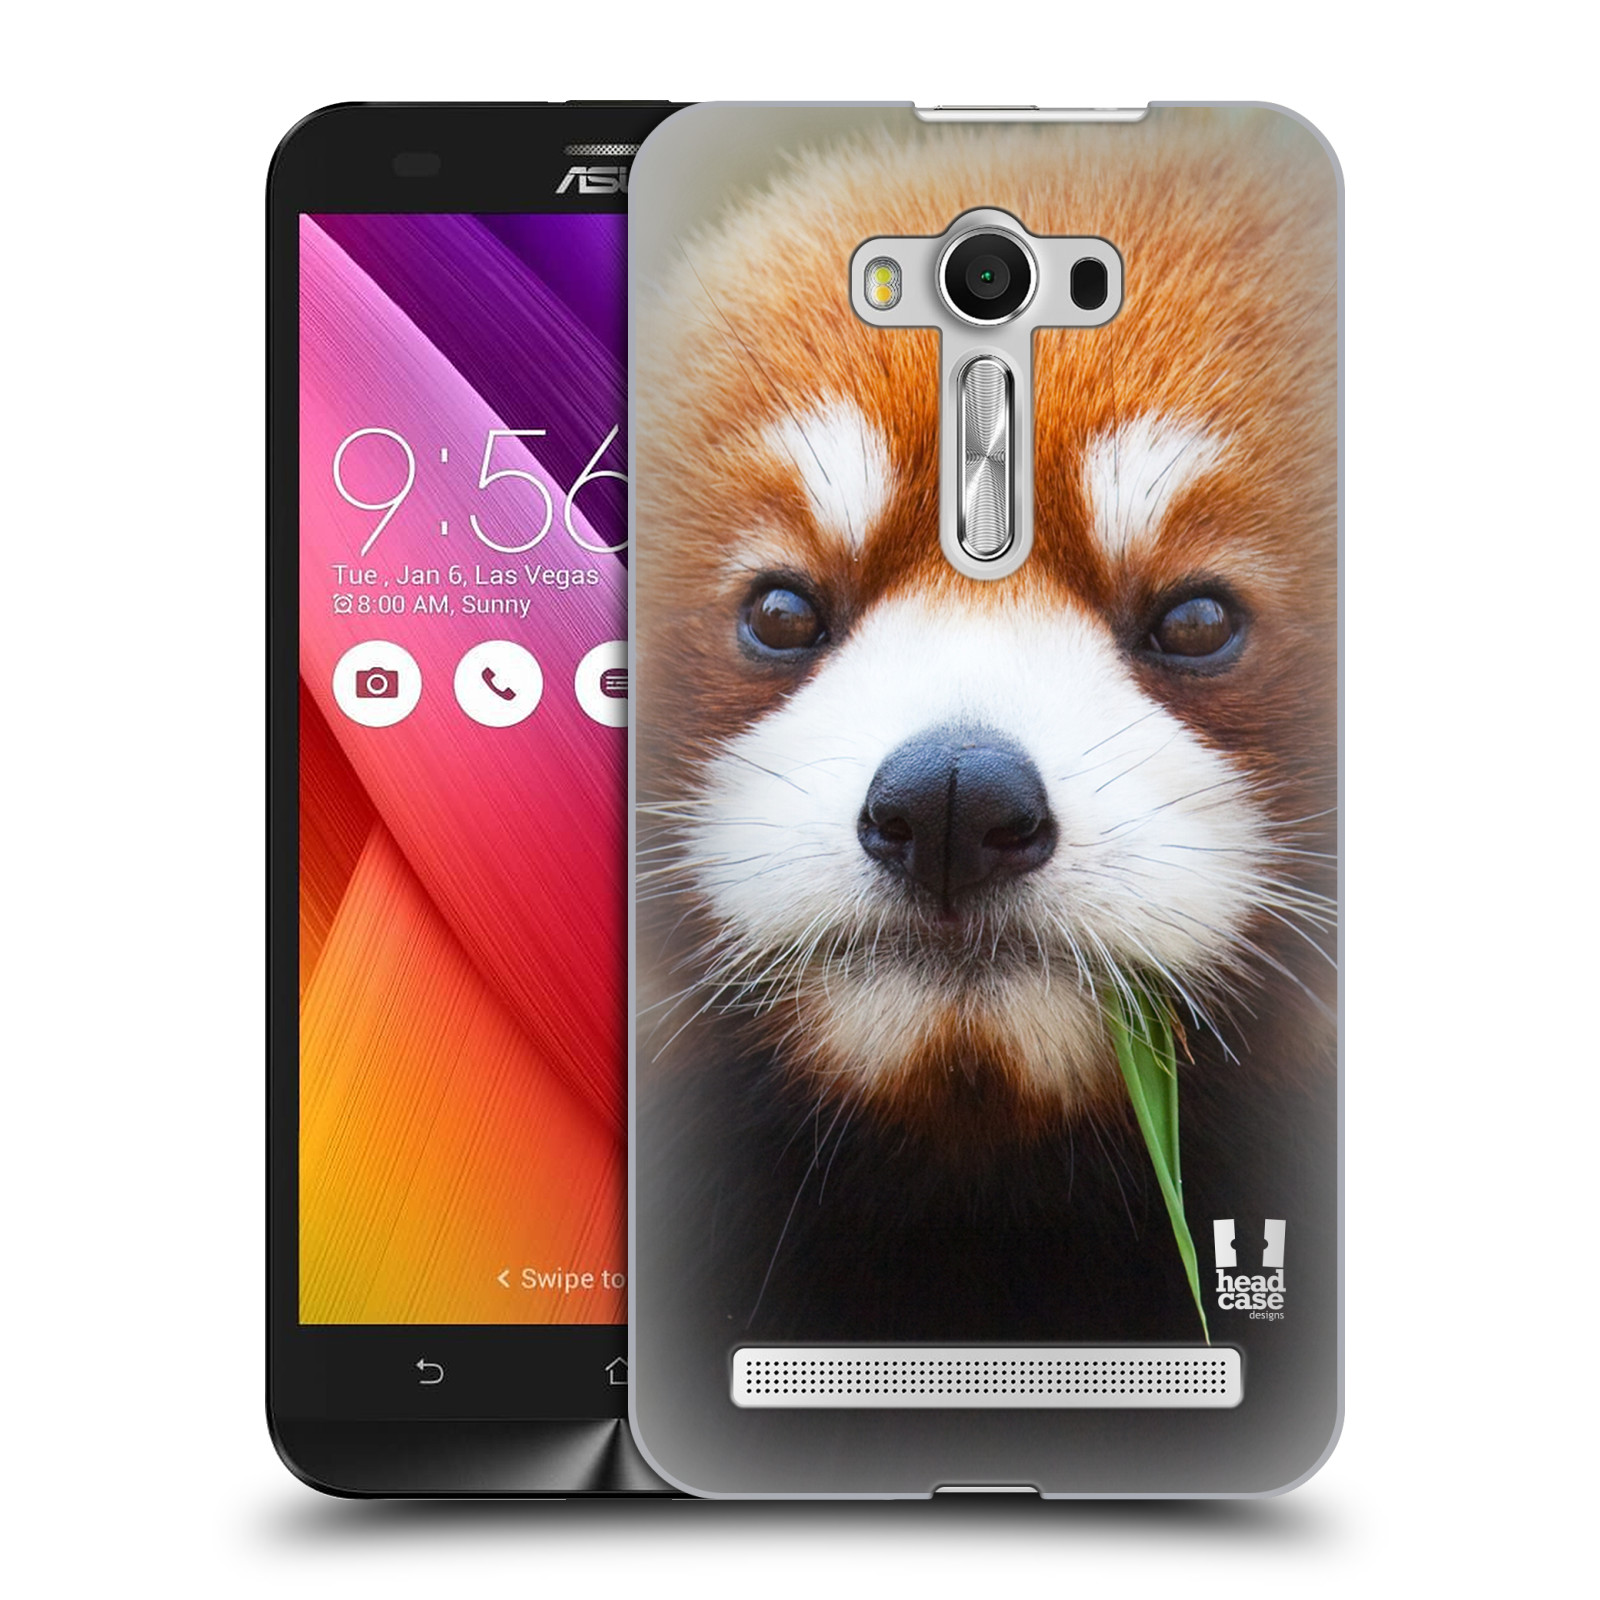 HEAD CASE plastový obal na mobil Asus Zenfone 2 LASER (5,5 displej ZE550KL) vzor Divočina, Divoký život a zvířata foto PANDA HNĚDÁ